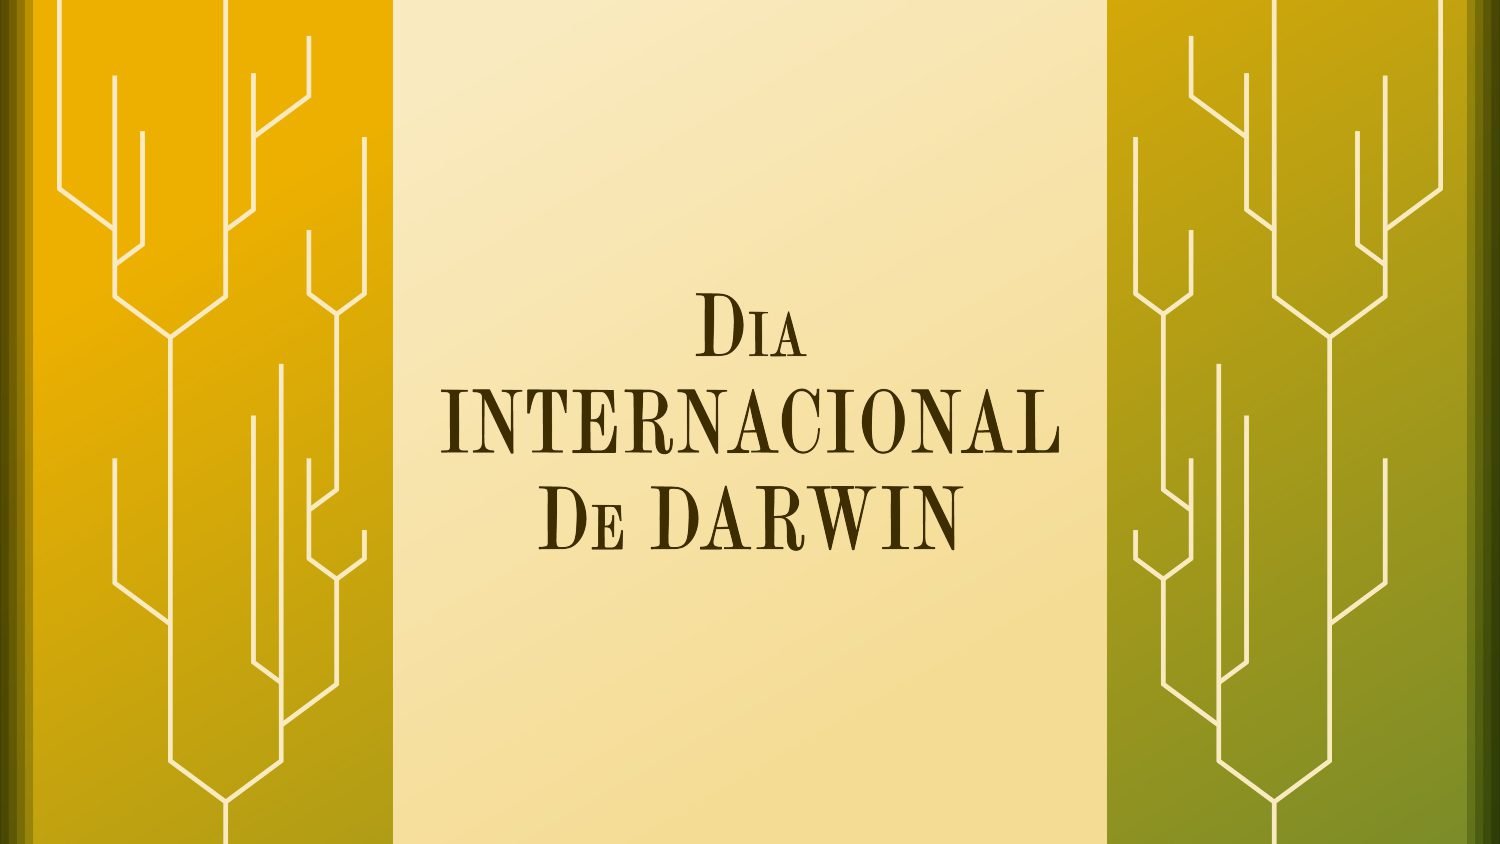 Dia Internacional de Darwin